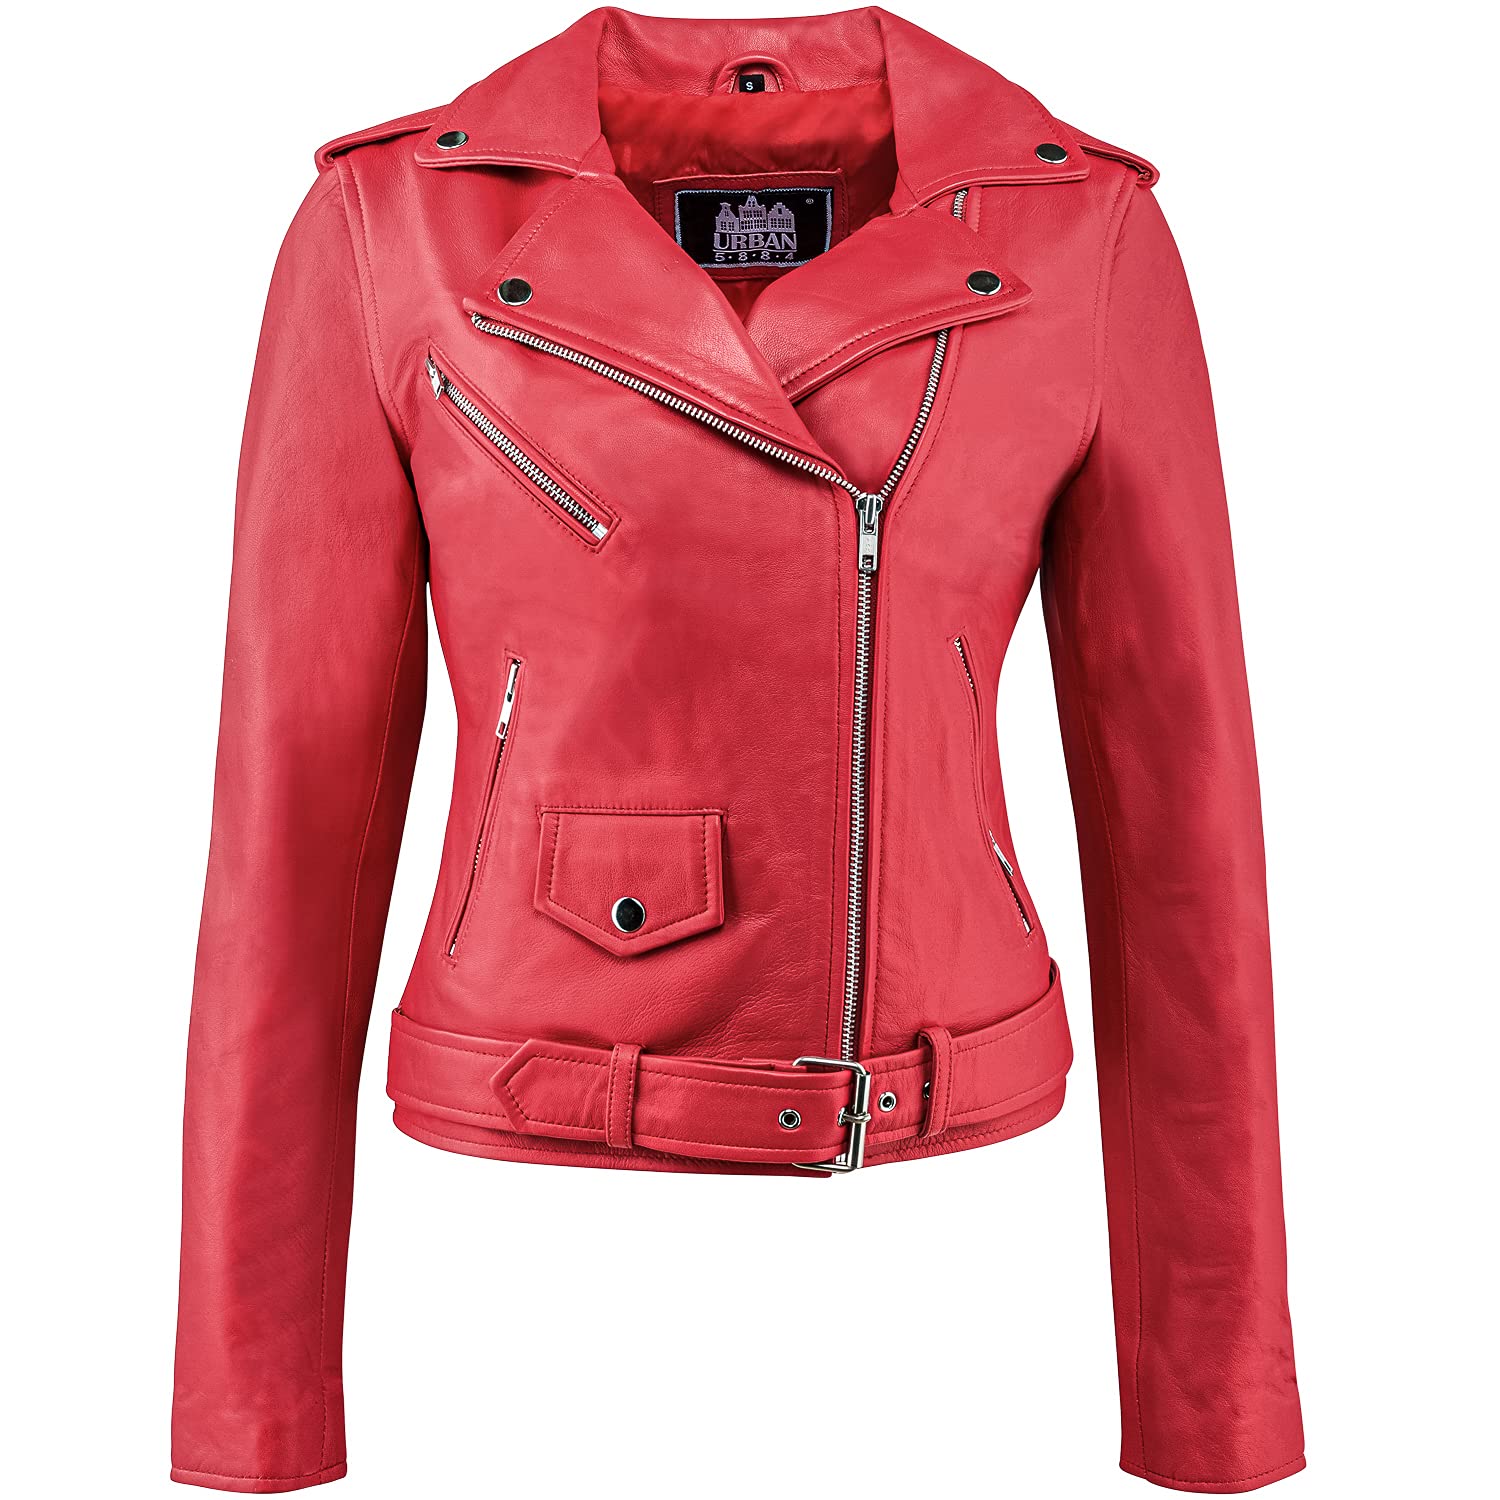 URBAN LEATHER Damen Ur-192 Perfecto Retro Damen Lederjacke rot lamm nappa, Rot, S EU von Urban Leather